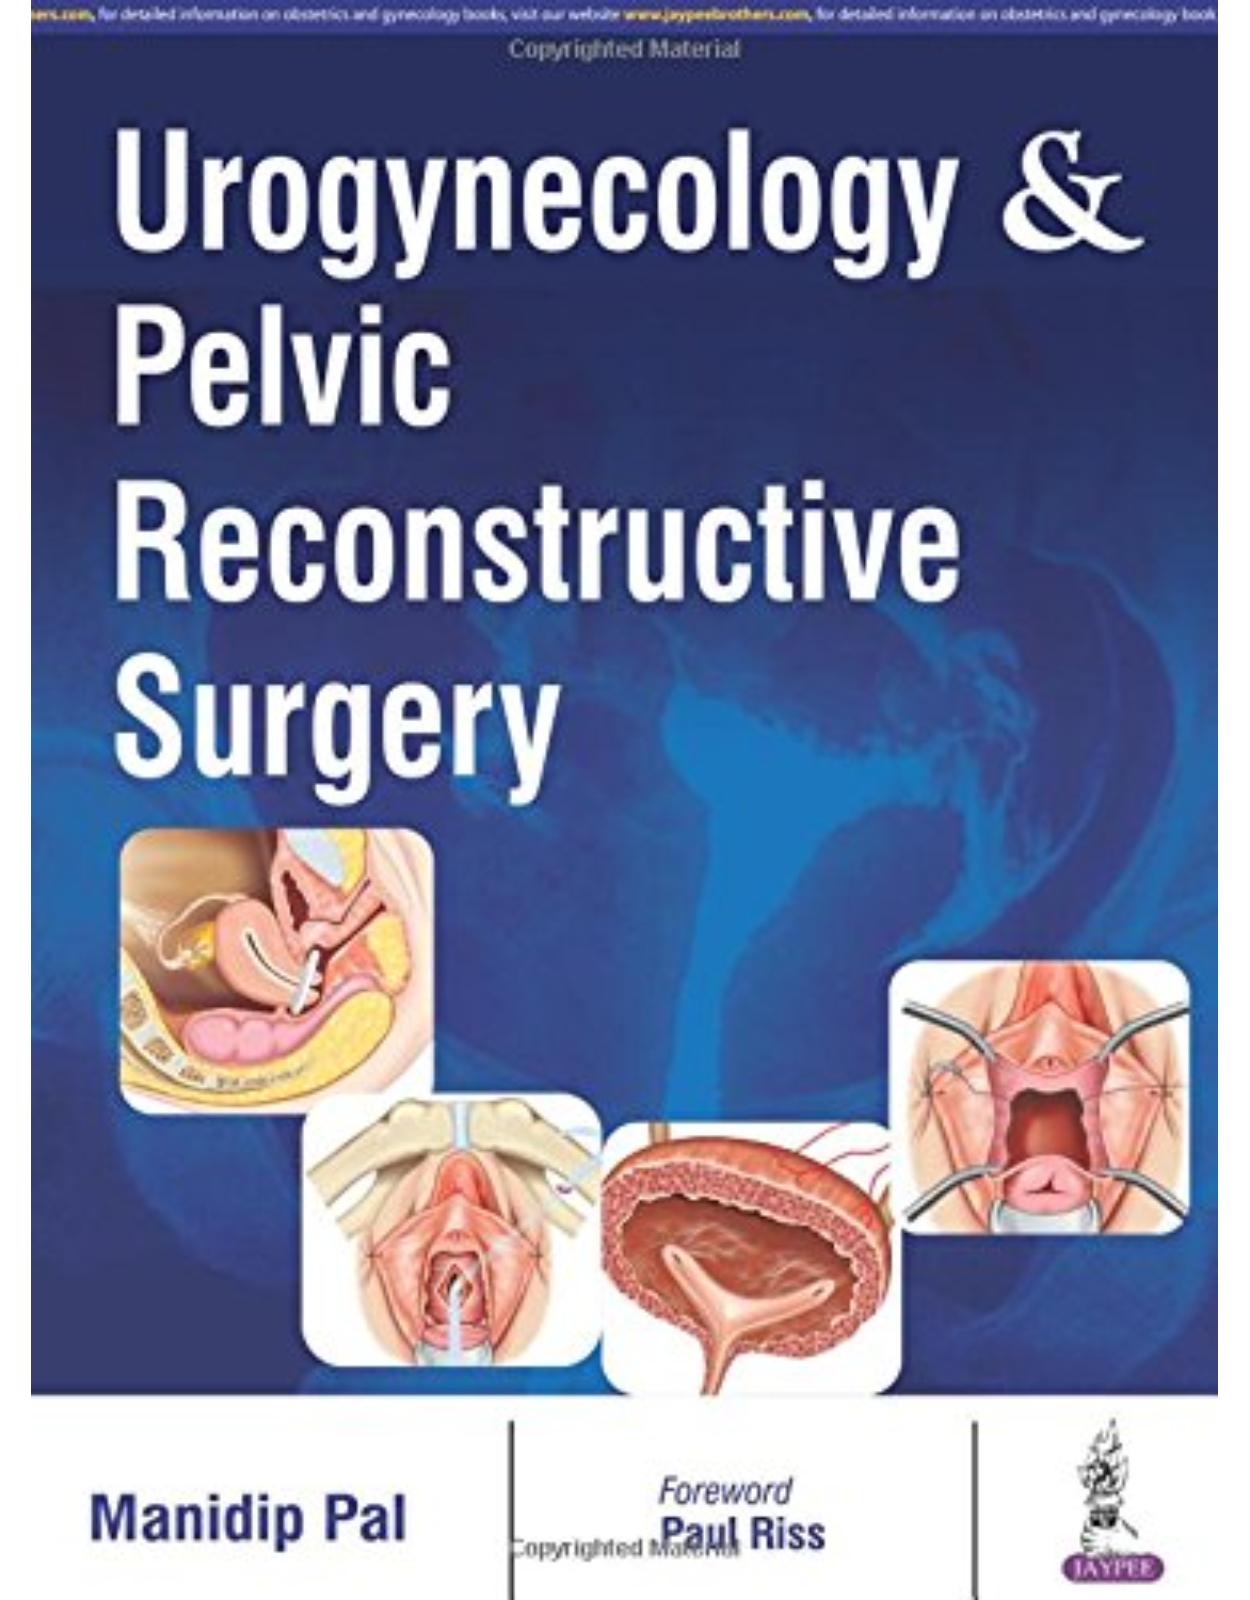  Urogynecology & Pelvic Reconstructive Surgery